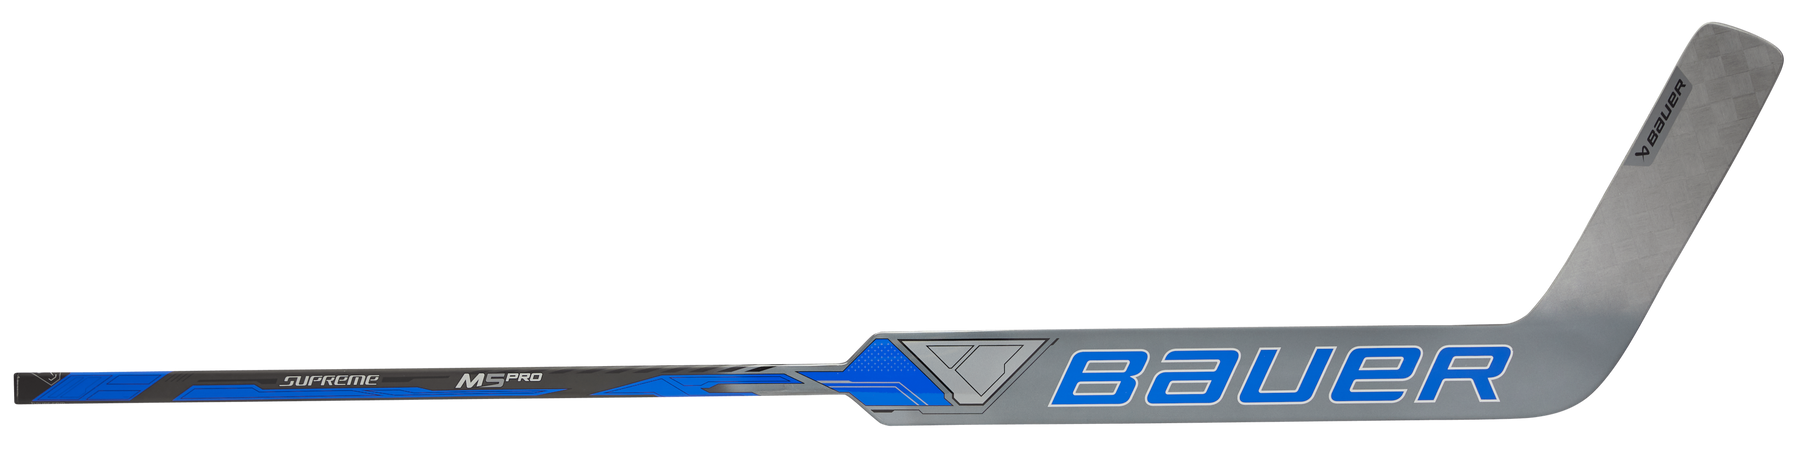 Bauer Supreme M5 Pro Intermediate Goalie Stick